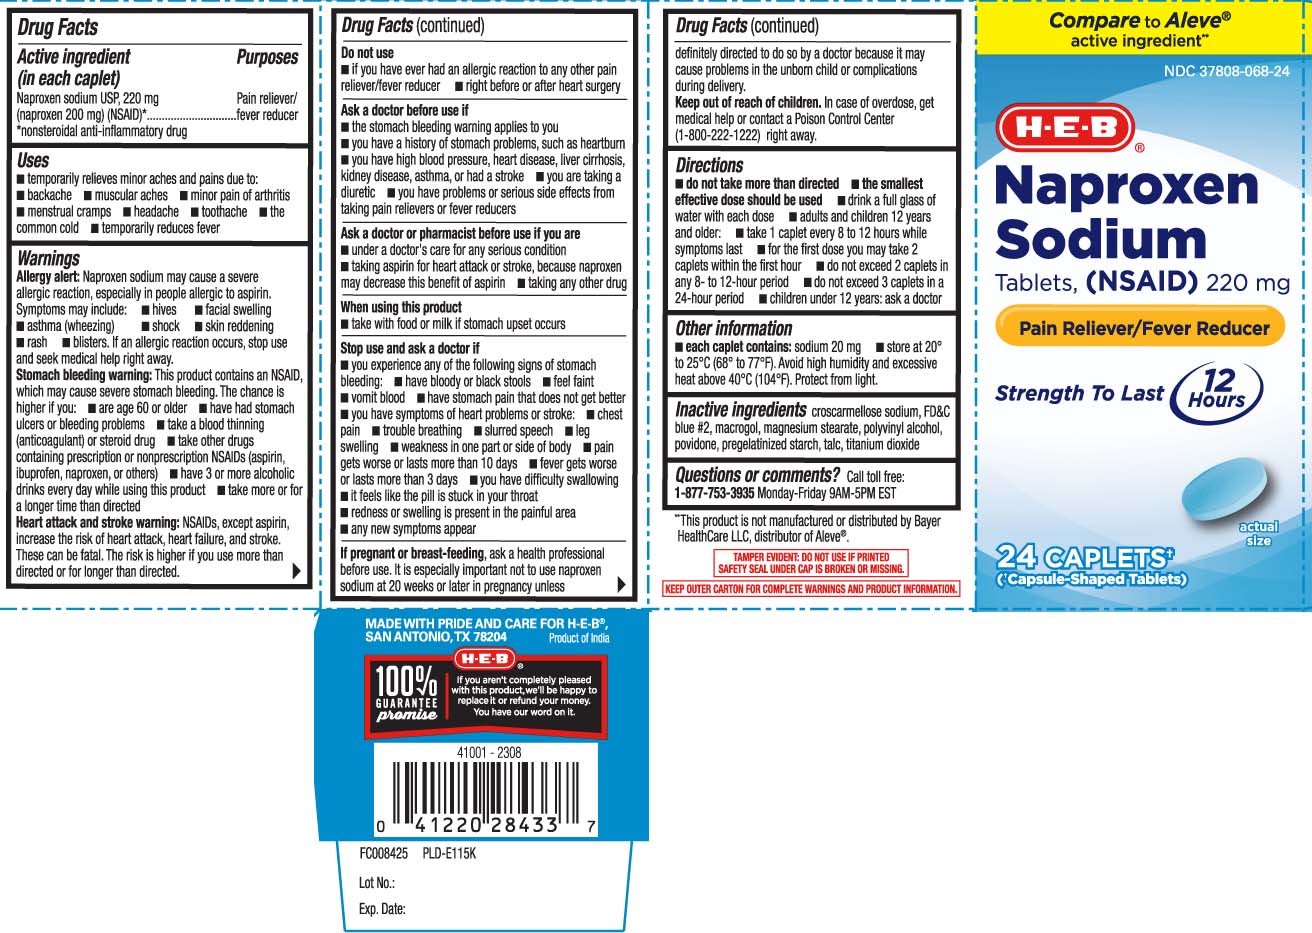 Naproxen sodium USP, 220 mg (naproxen 200 mg) (NSAID)* *nonsteroidal anti-inflammatory drug